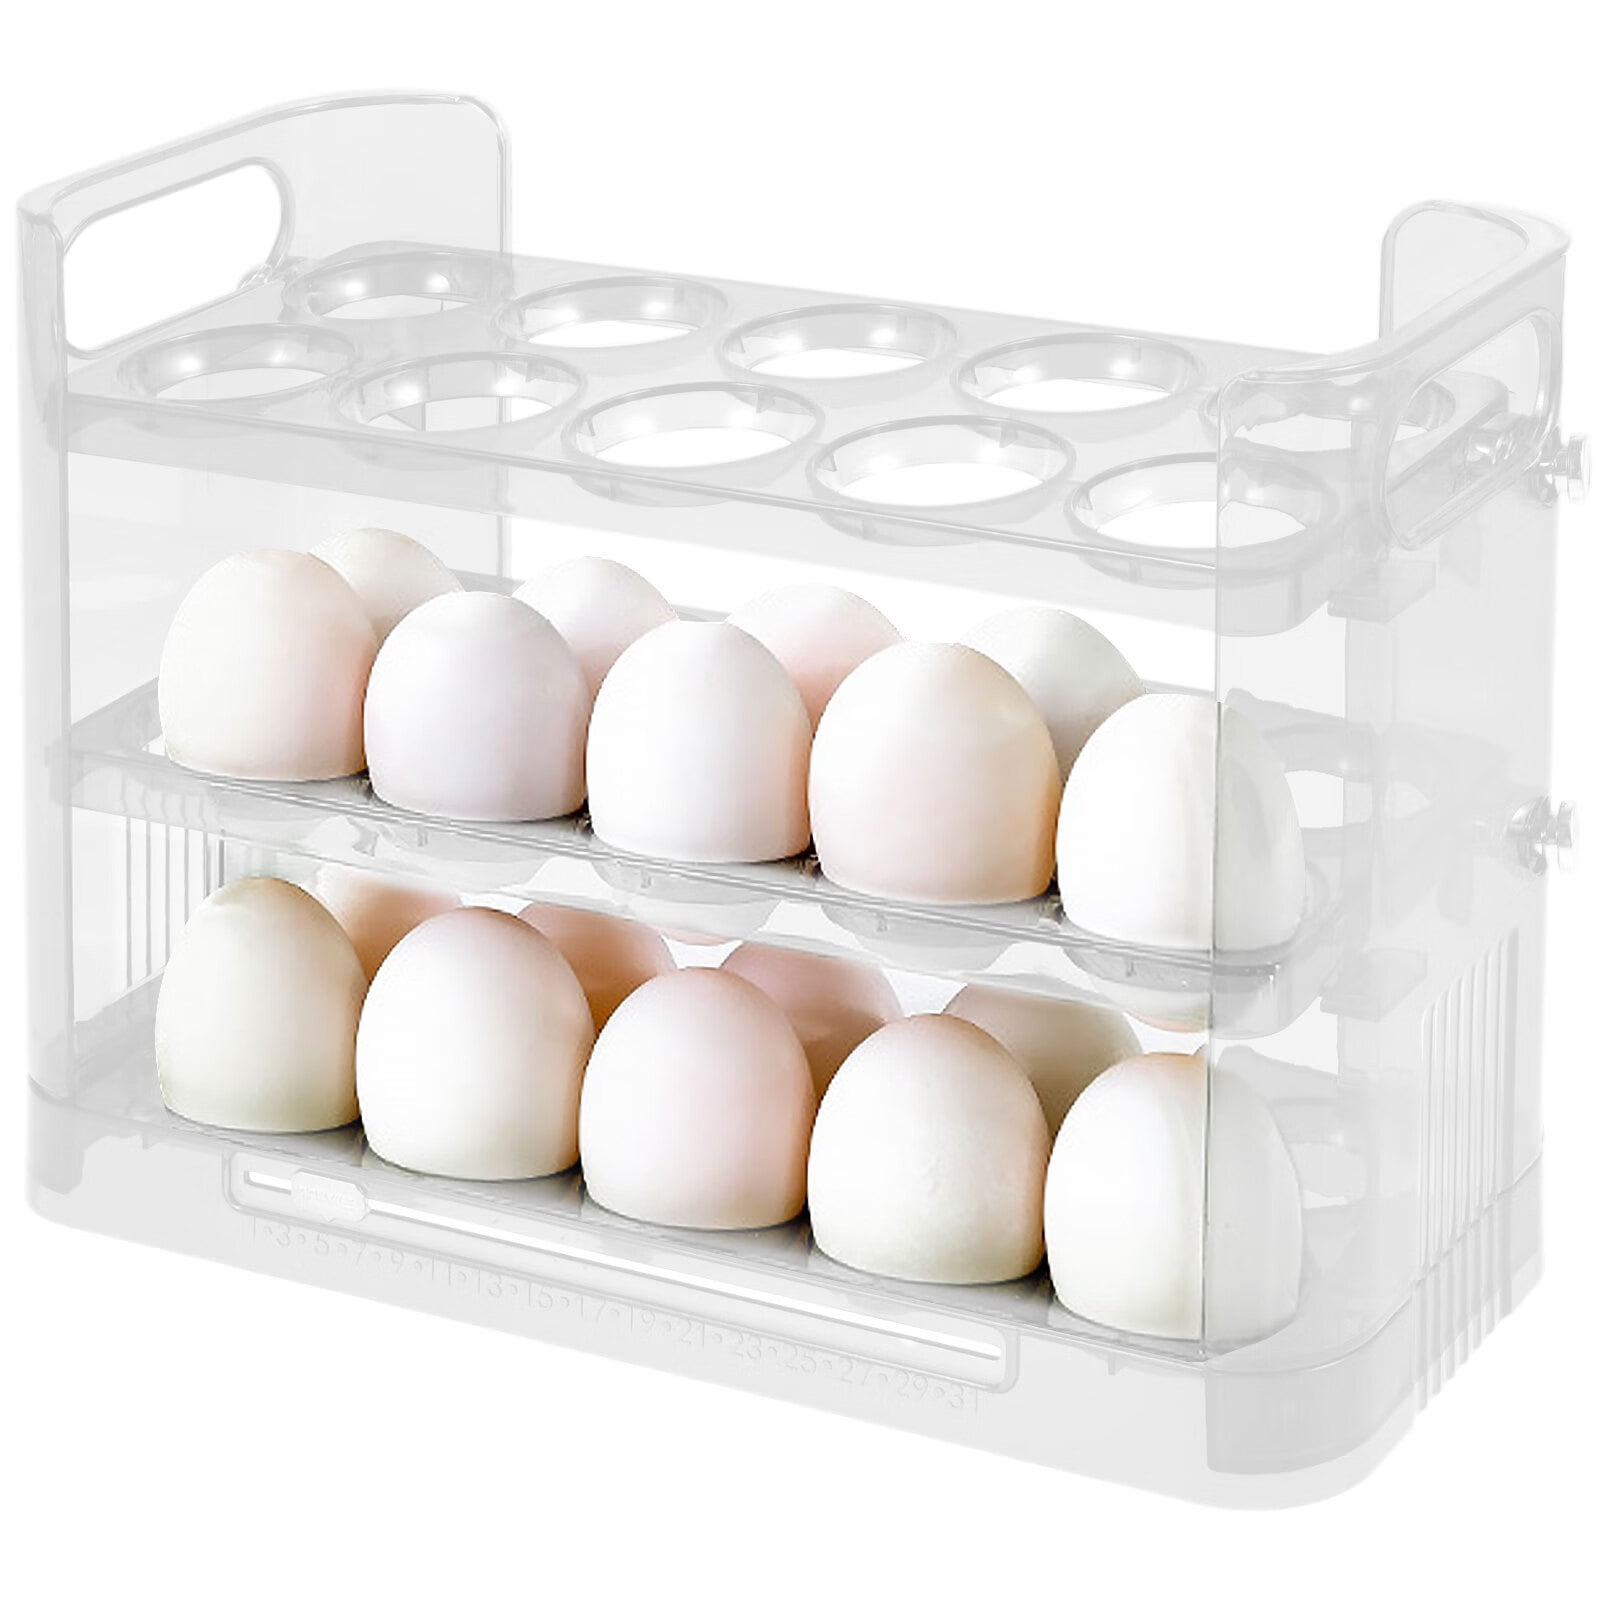 Auto Flip Egg Holder for Refrigerator, 3 Layer Egg Storage Container for  Refrige